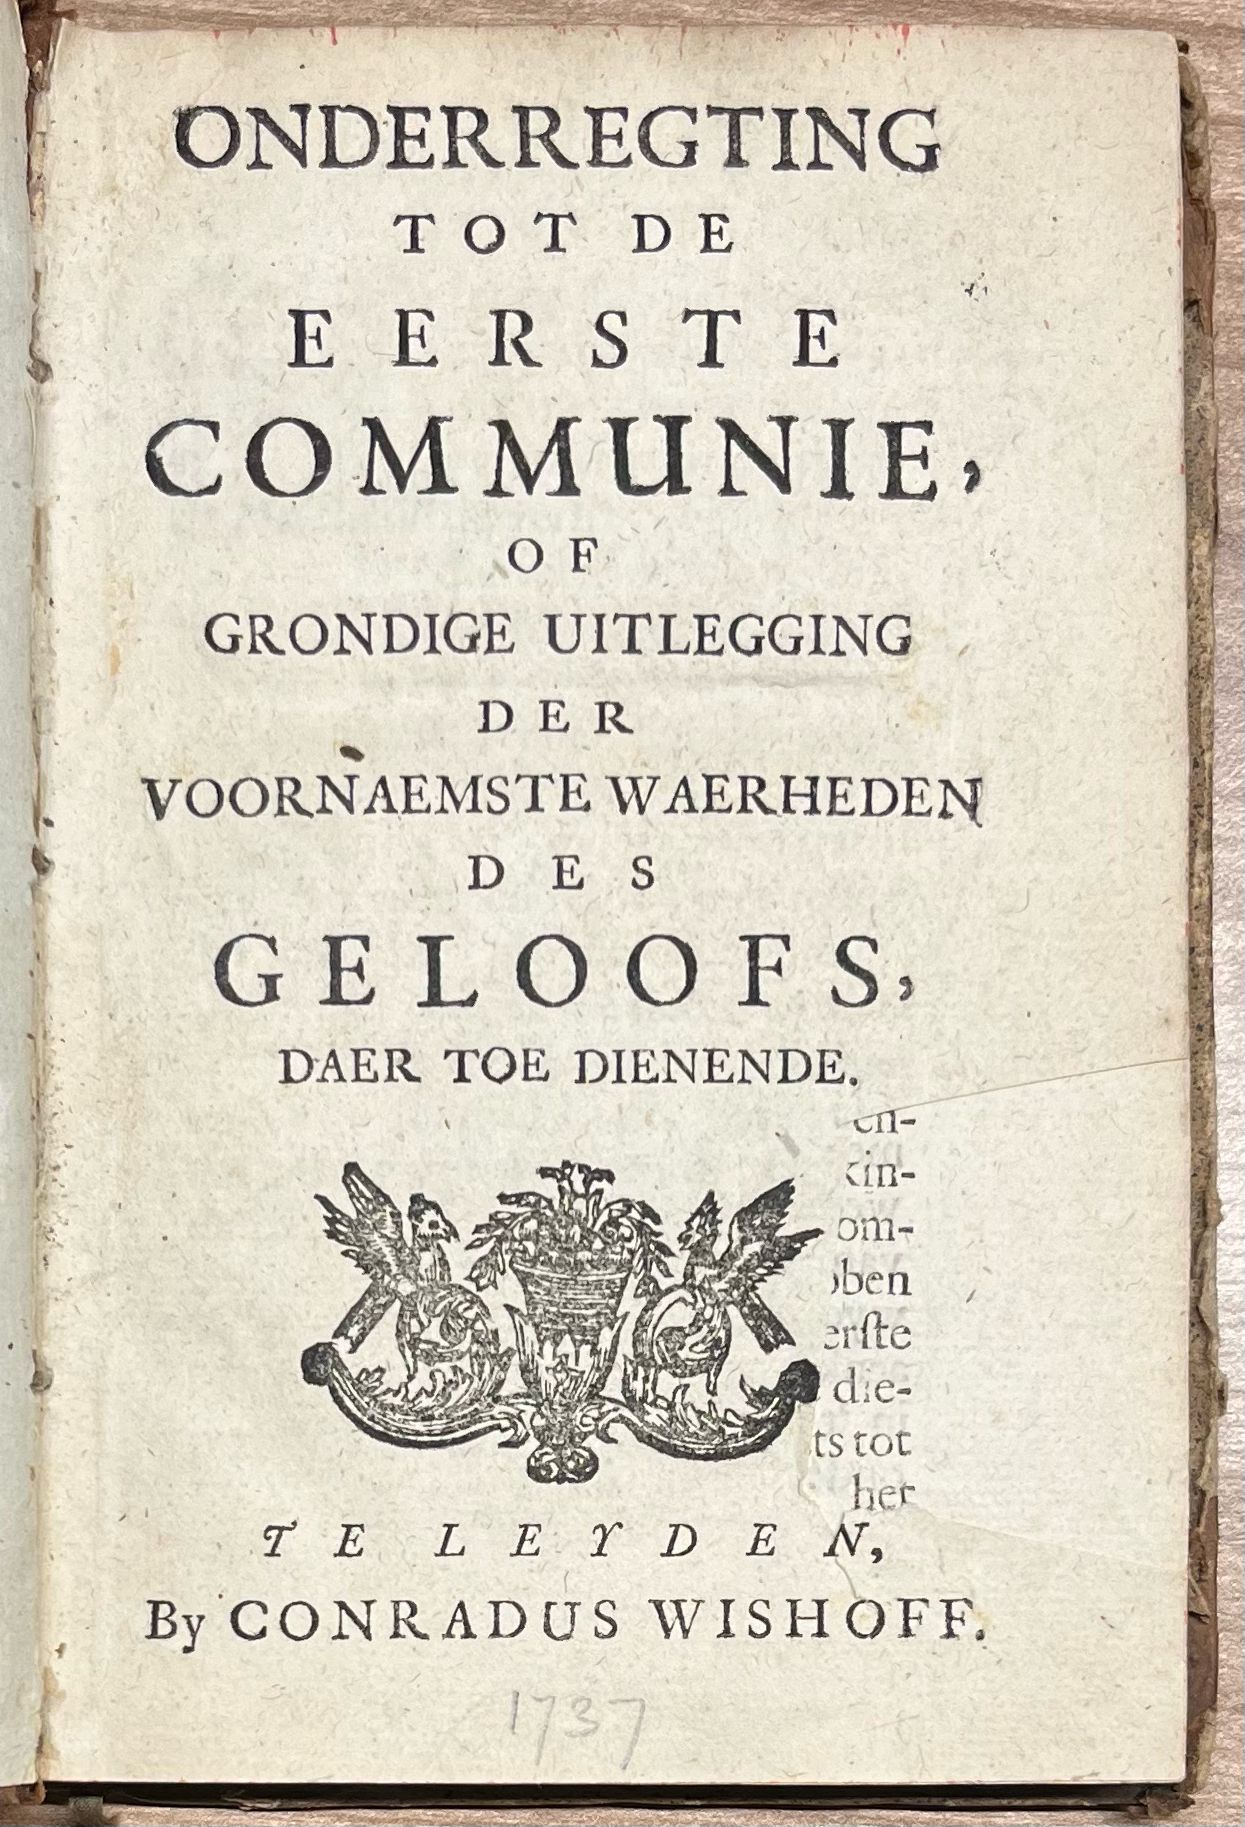  - Rare children's book, 1737, Education | Onderregting tot de Eerste Communie, of Grondige Uitlegging der Voornaemste Waerheden des Geloofs, daer toe dienende. Leyden, Conradus Wishoff, 1737, 188+(4) pp.